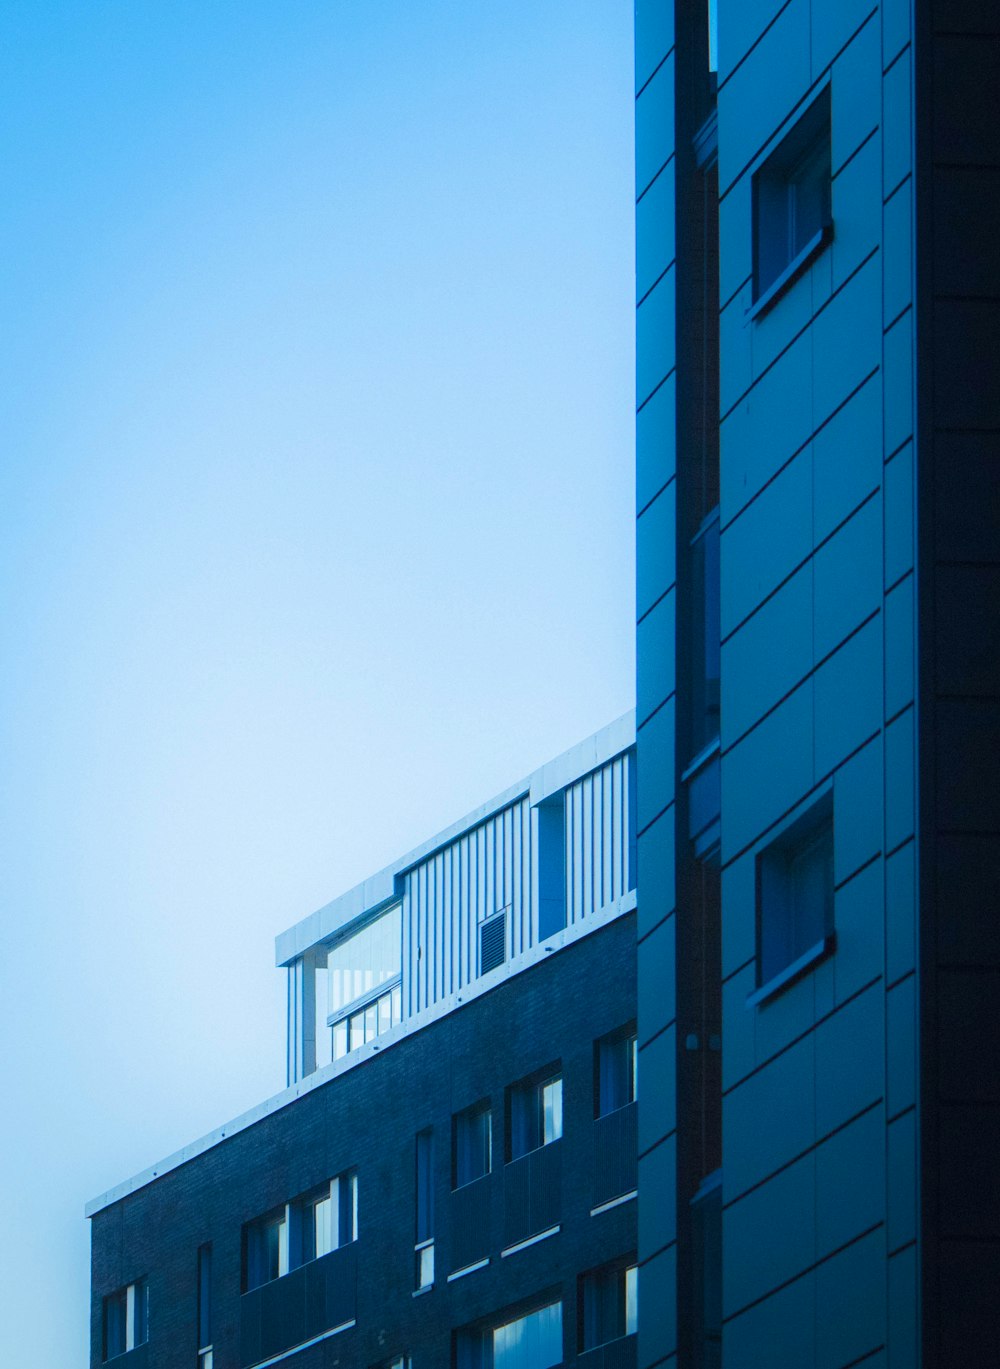 blue concrete building under blue sky during daytime